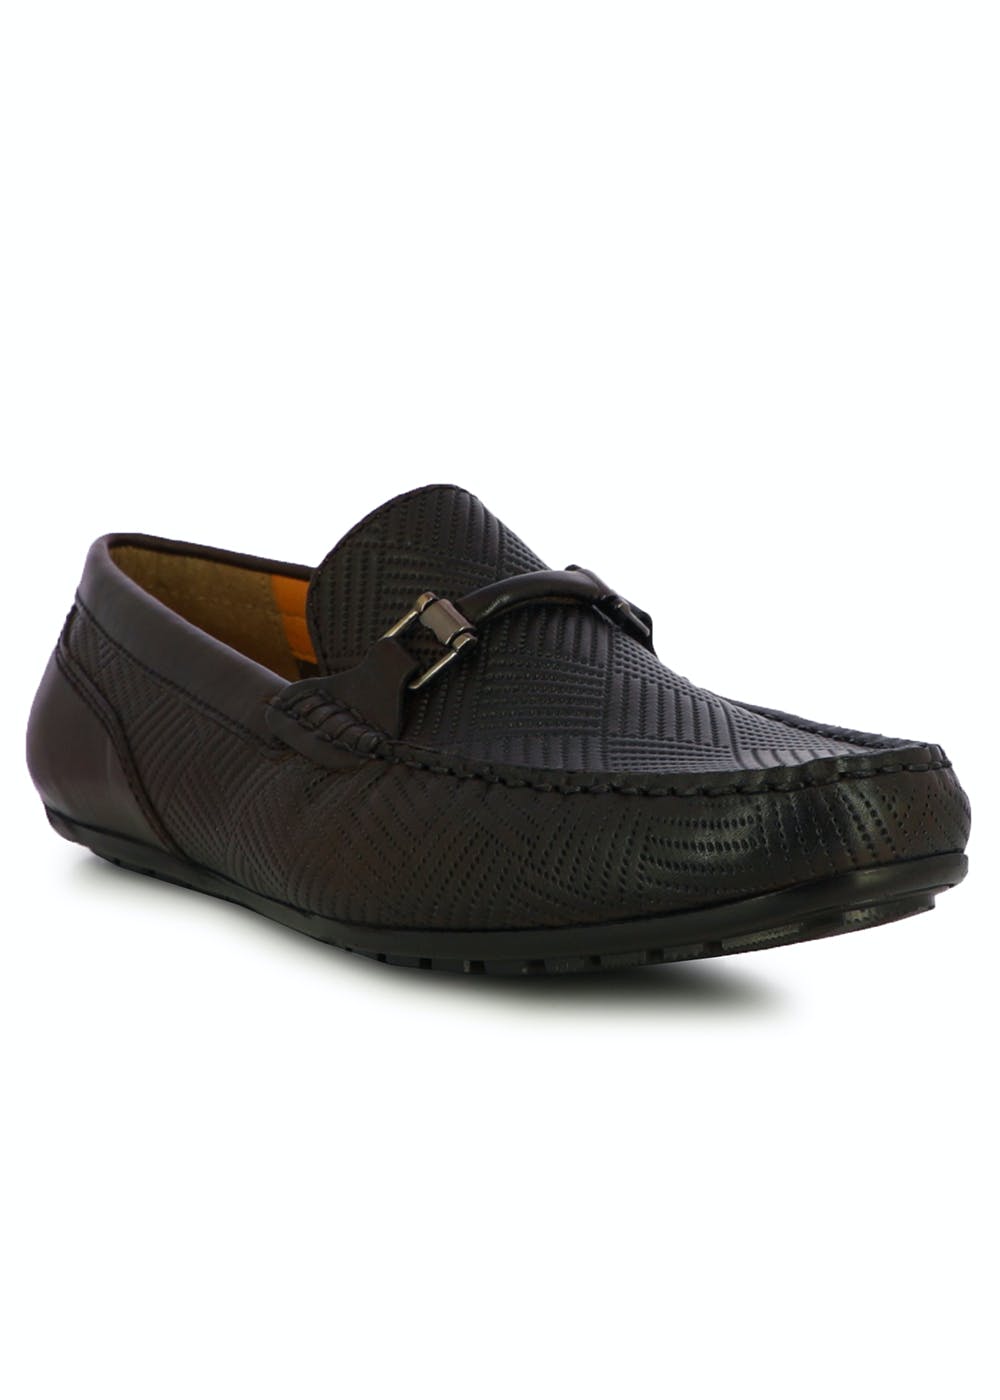 Get Travis Brown Formal Loafers at ₹ 2698 | LBB Shop